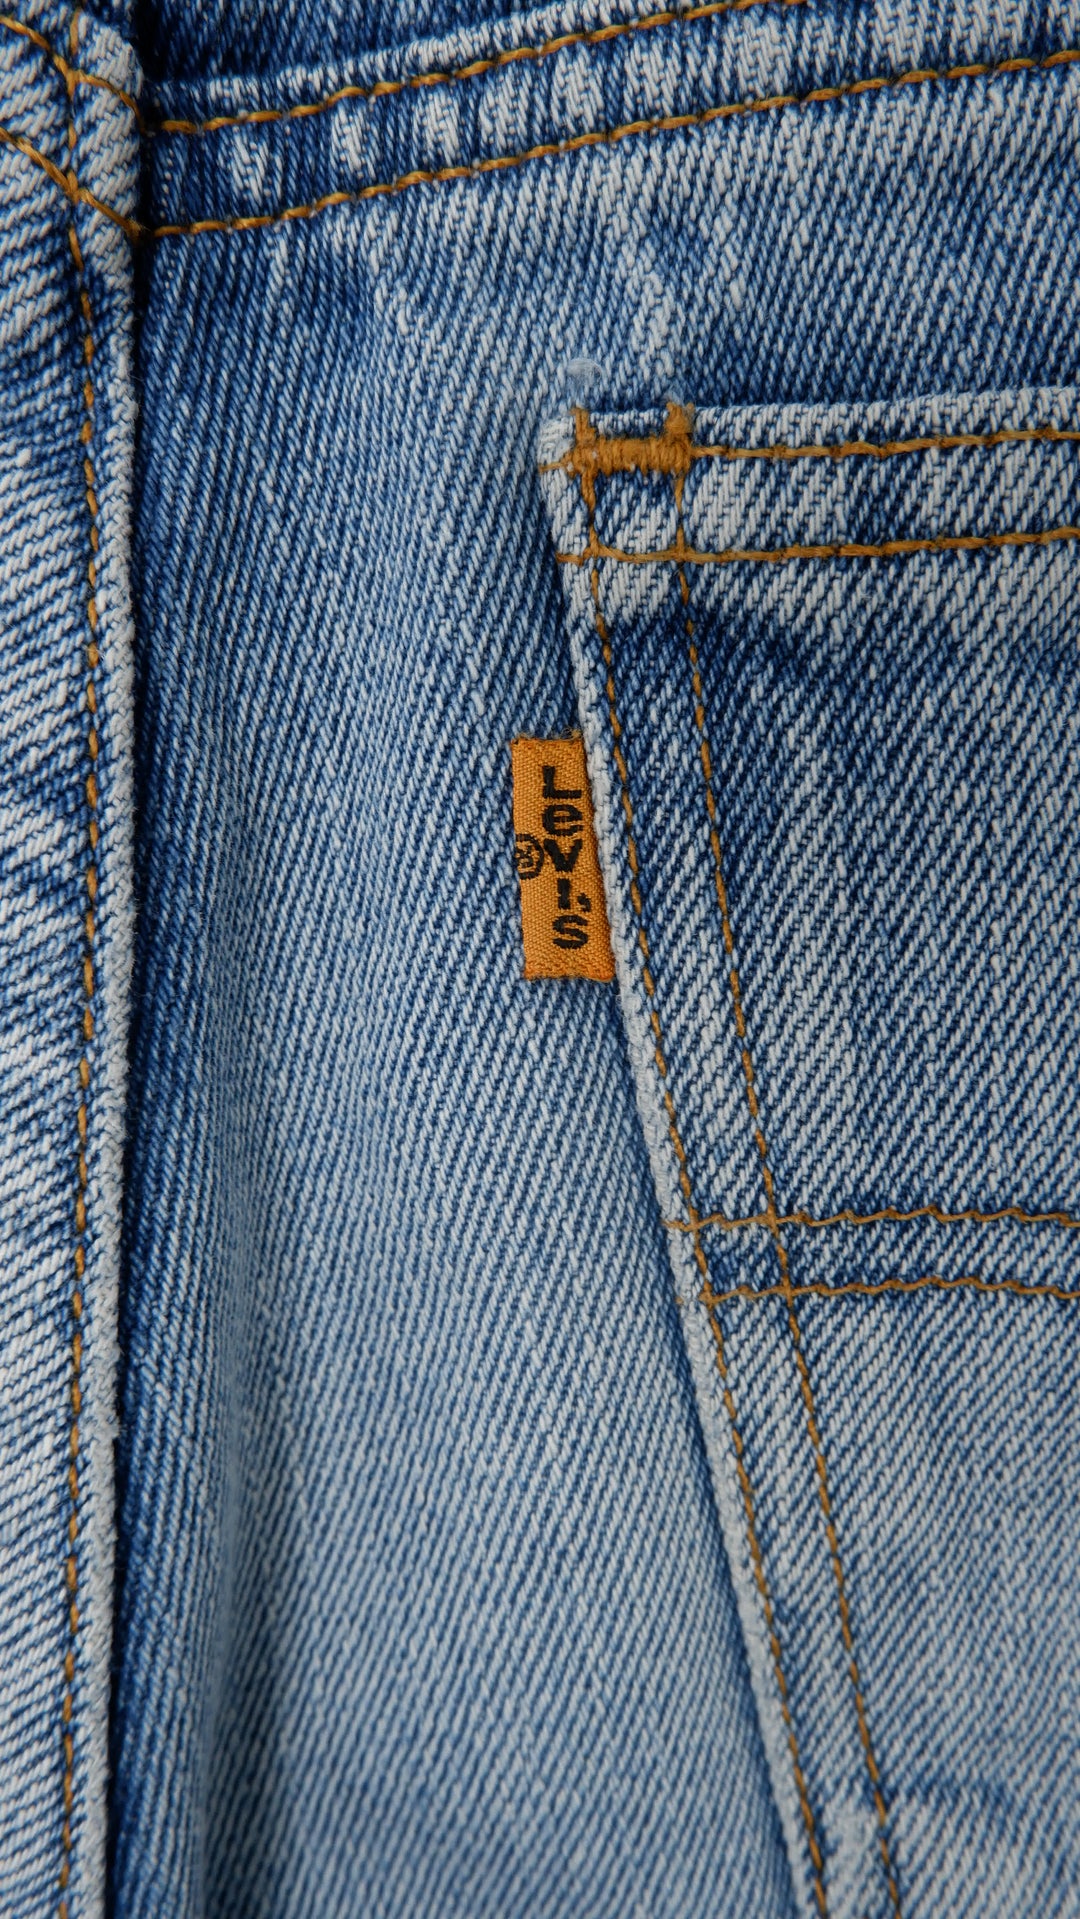 Levi Strauss # 602 Orange Tab VNTG Ladies Custom Denim Shorts